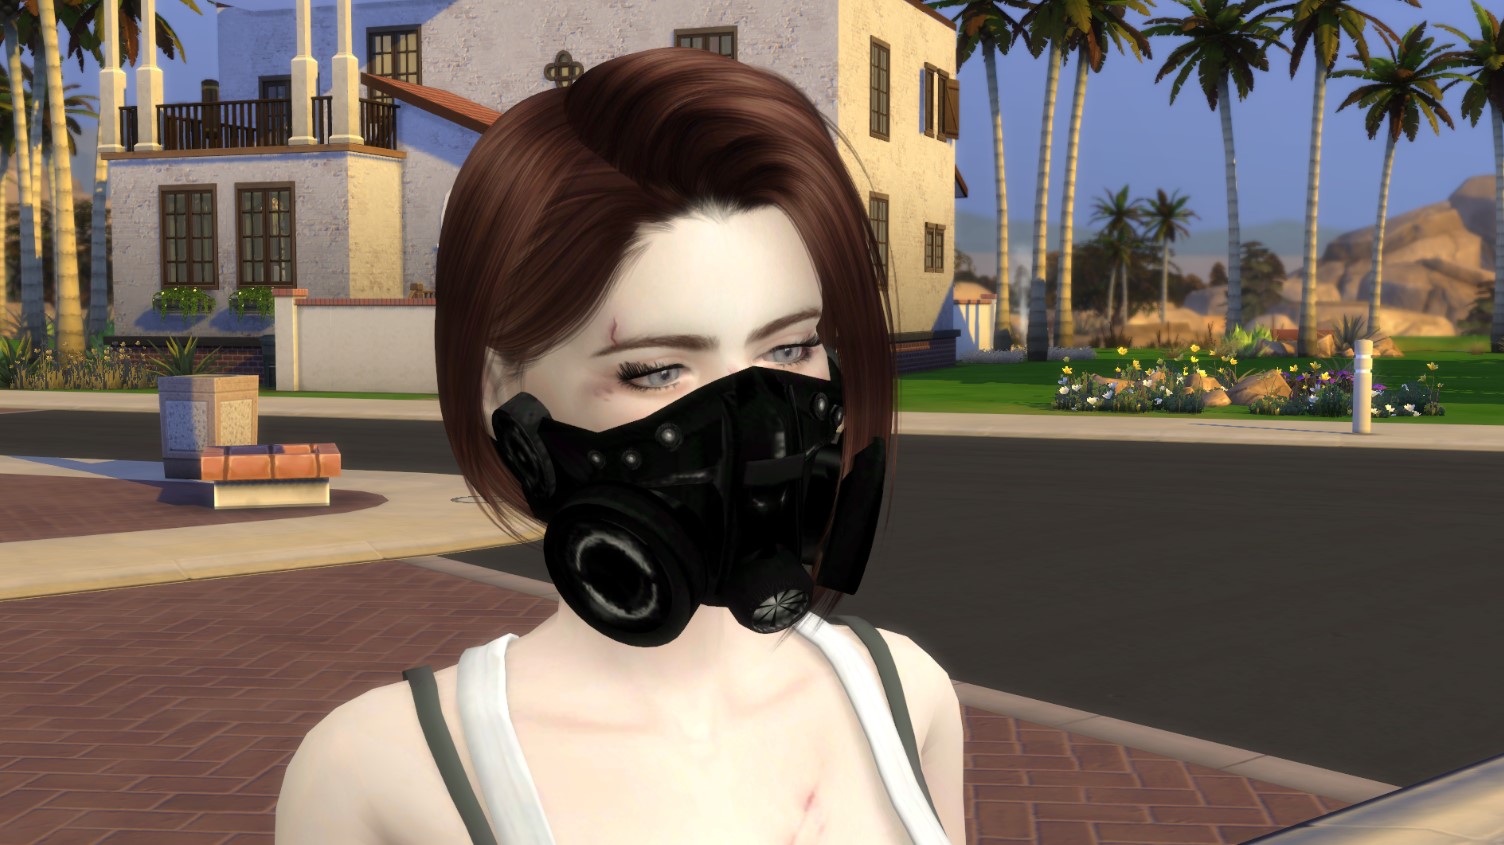 Jill Valentine - The Sims 4 / Sim Models | The Sims 4